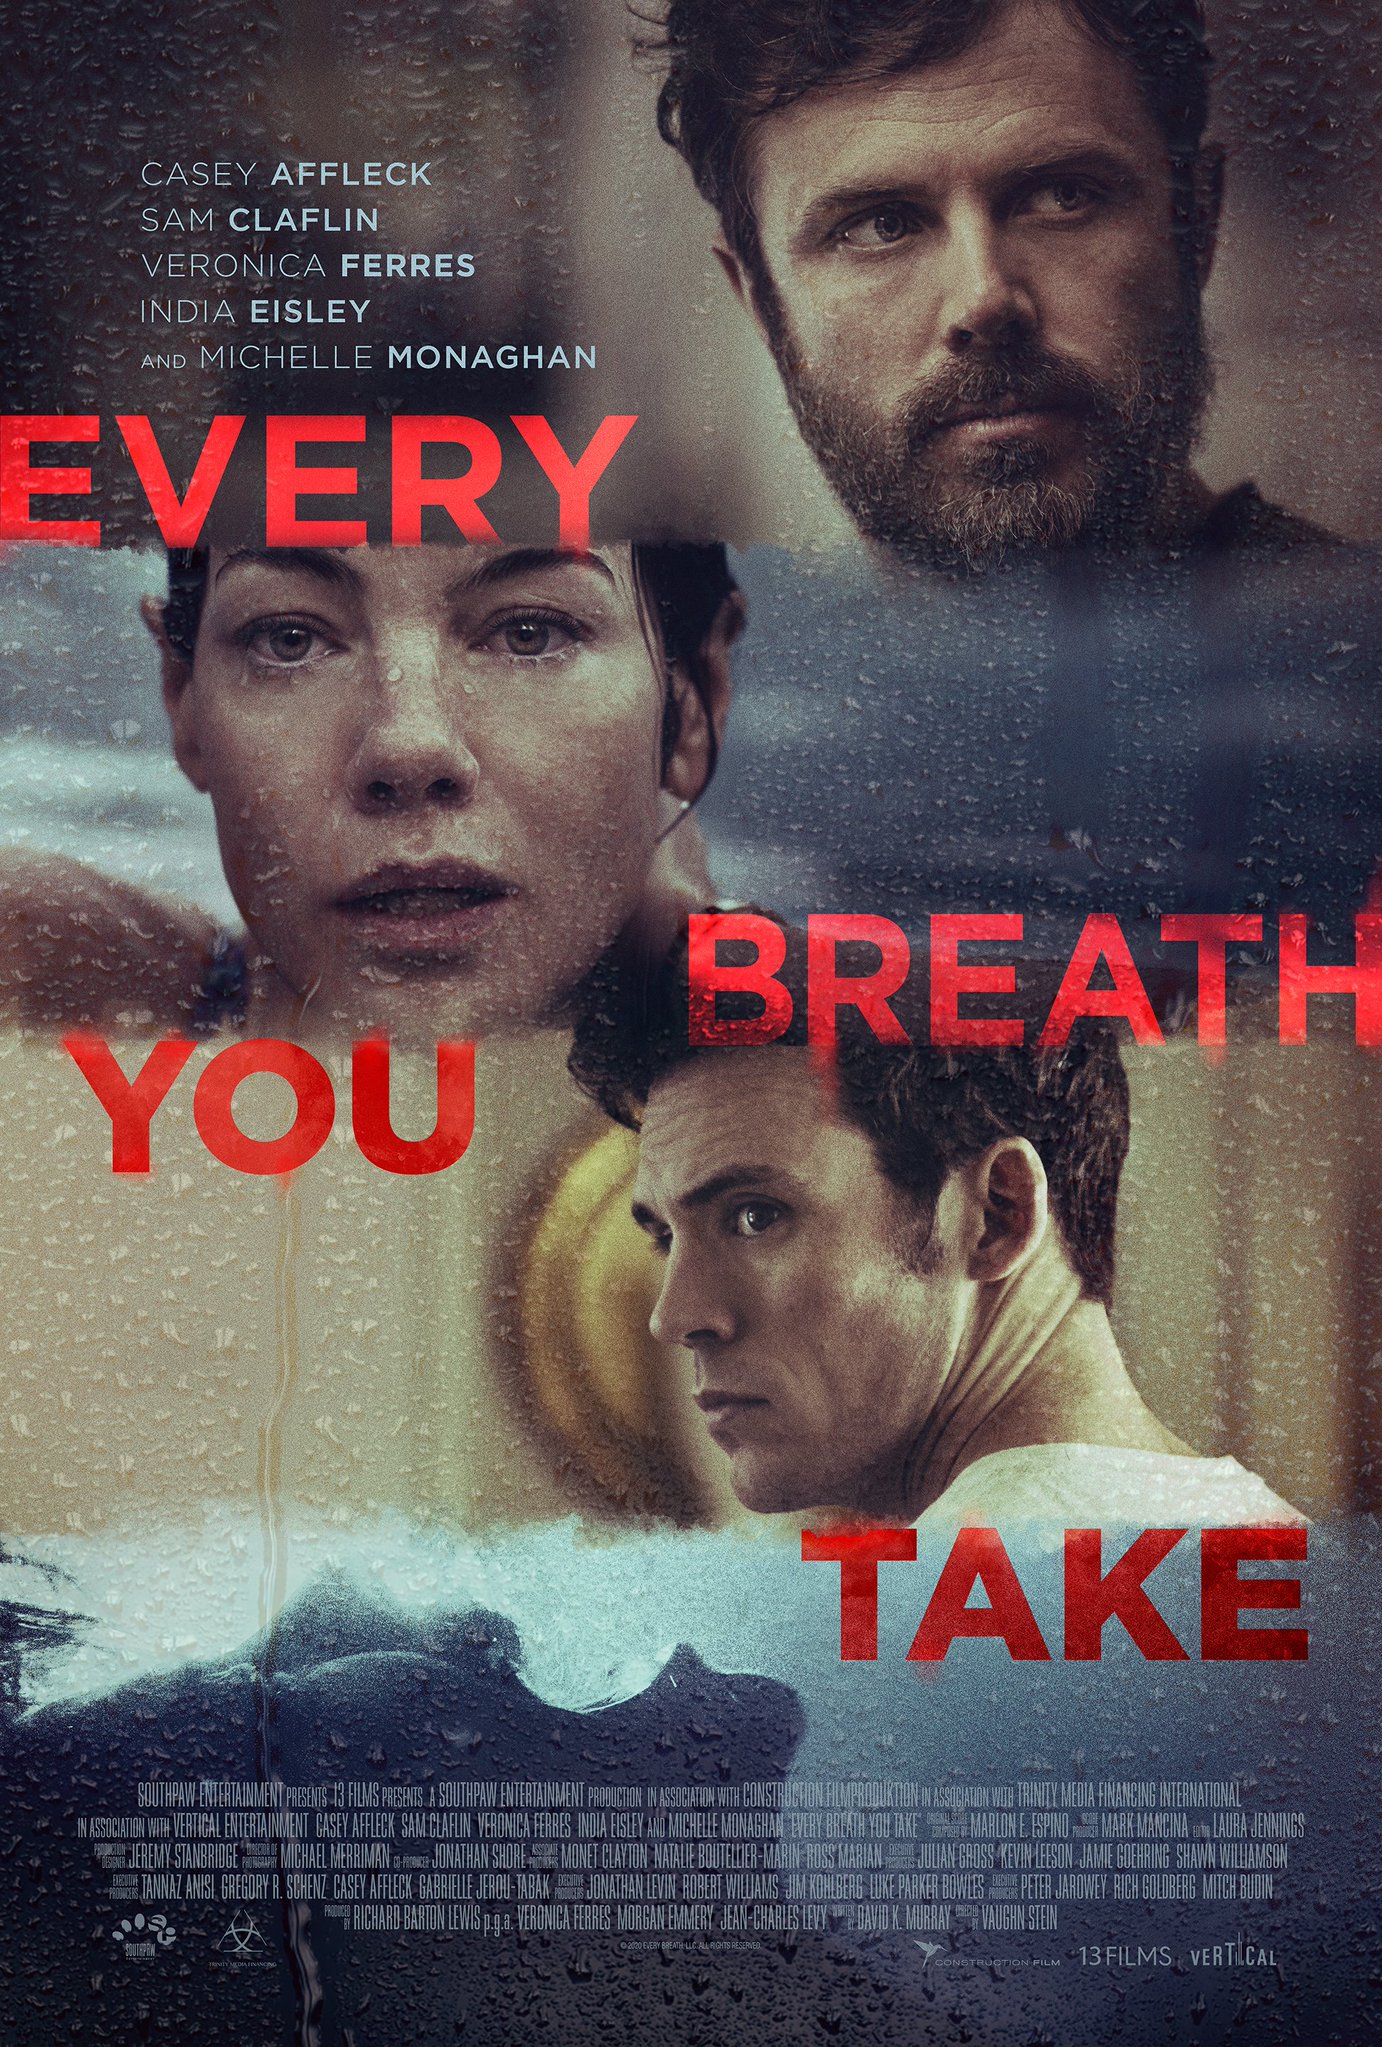 Nonton film Every Breath You Take layarkaca21 indoxx1 ganool online streaming terbaru